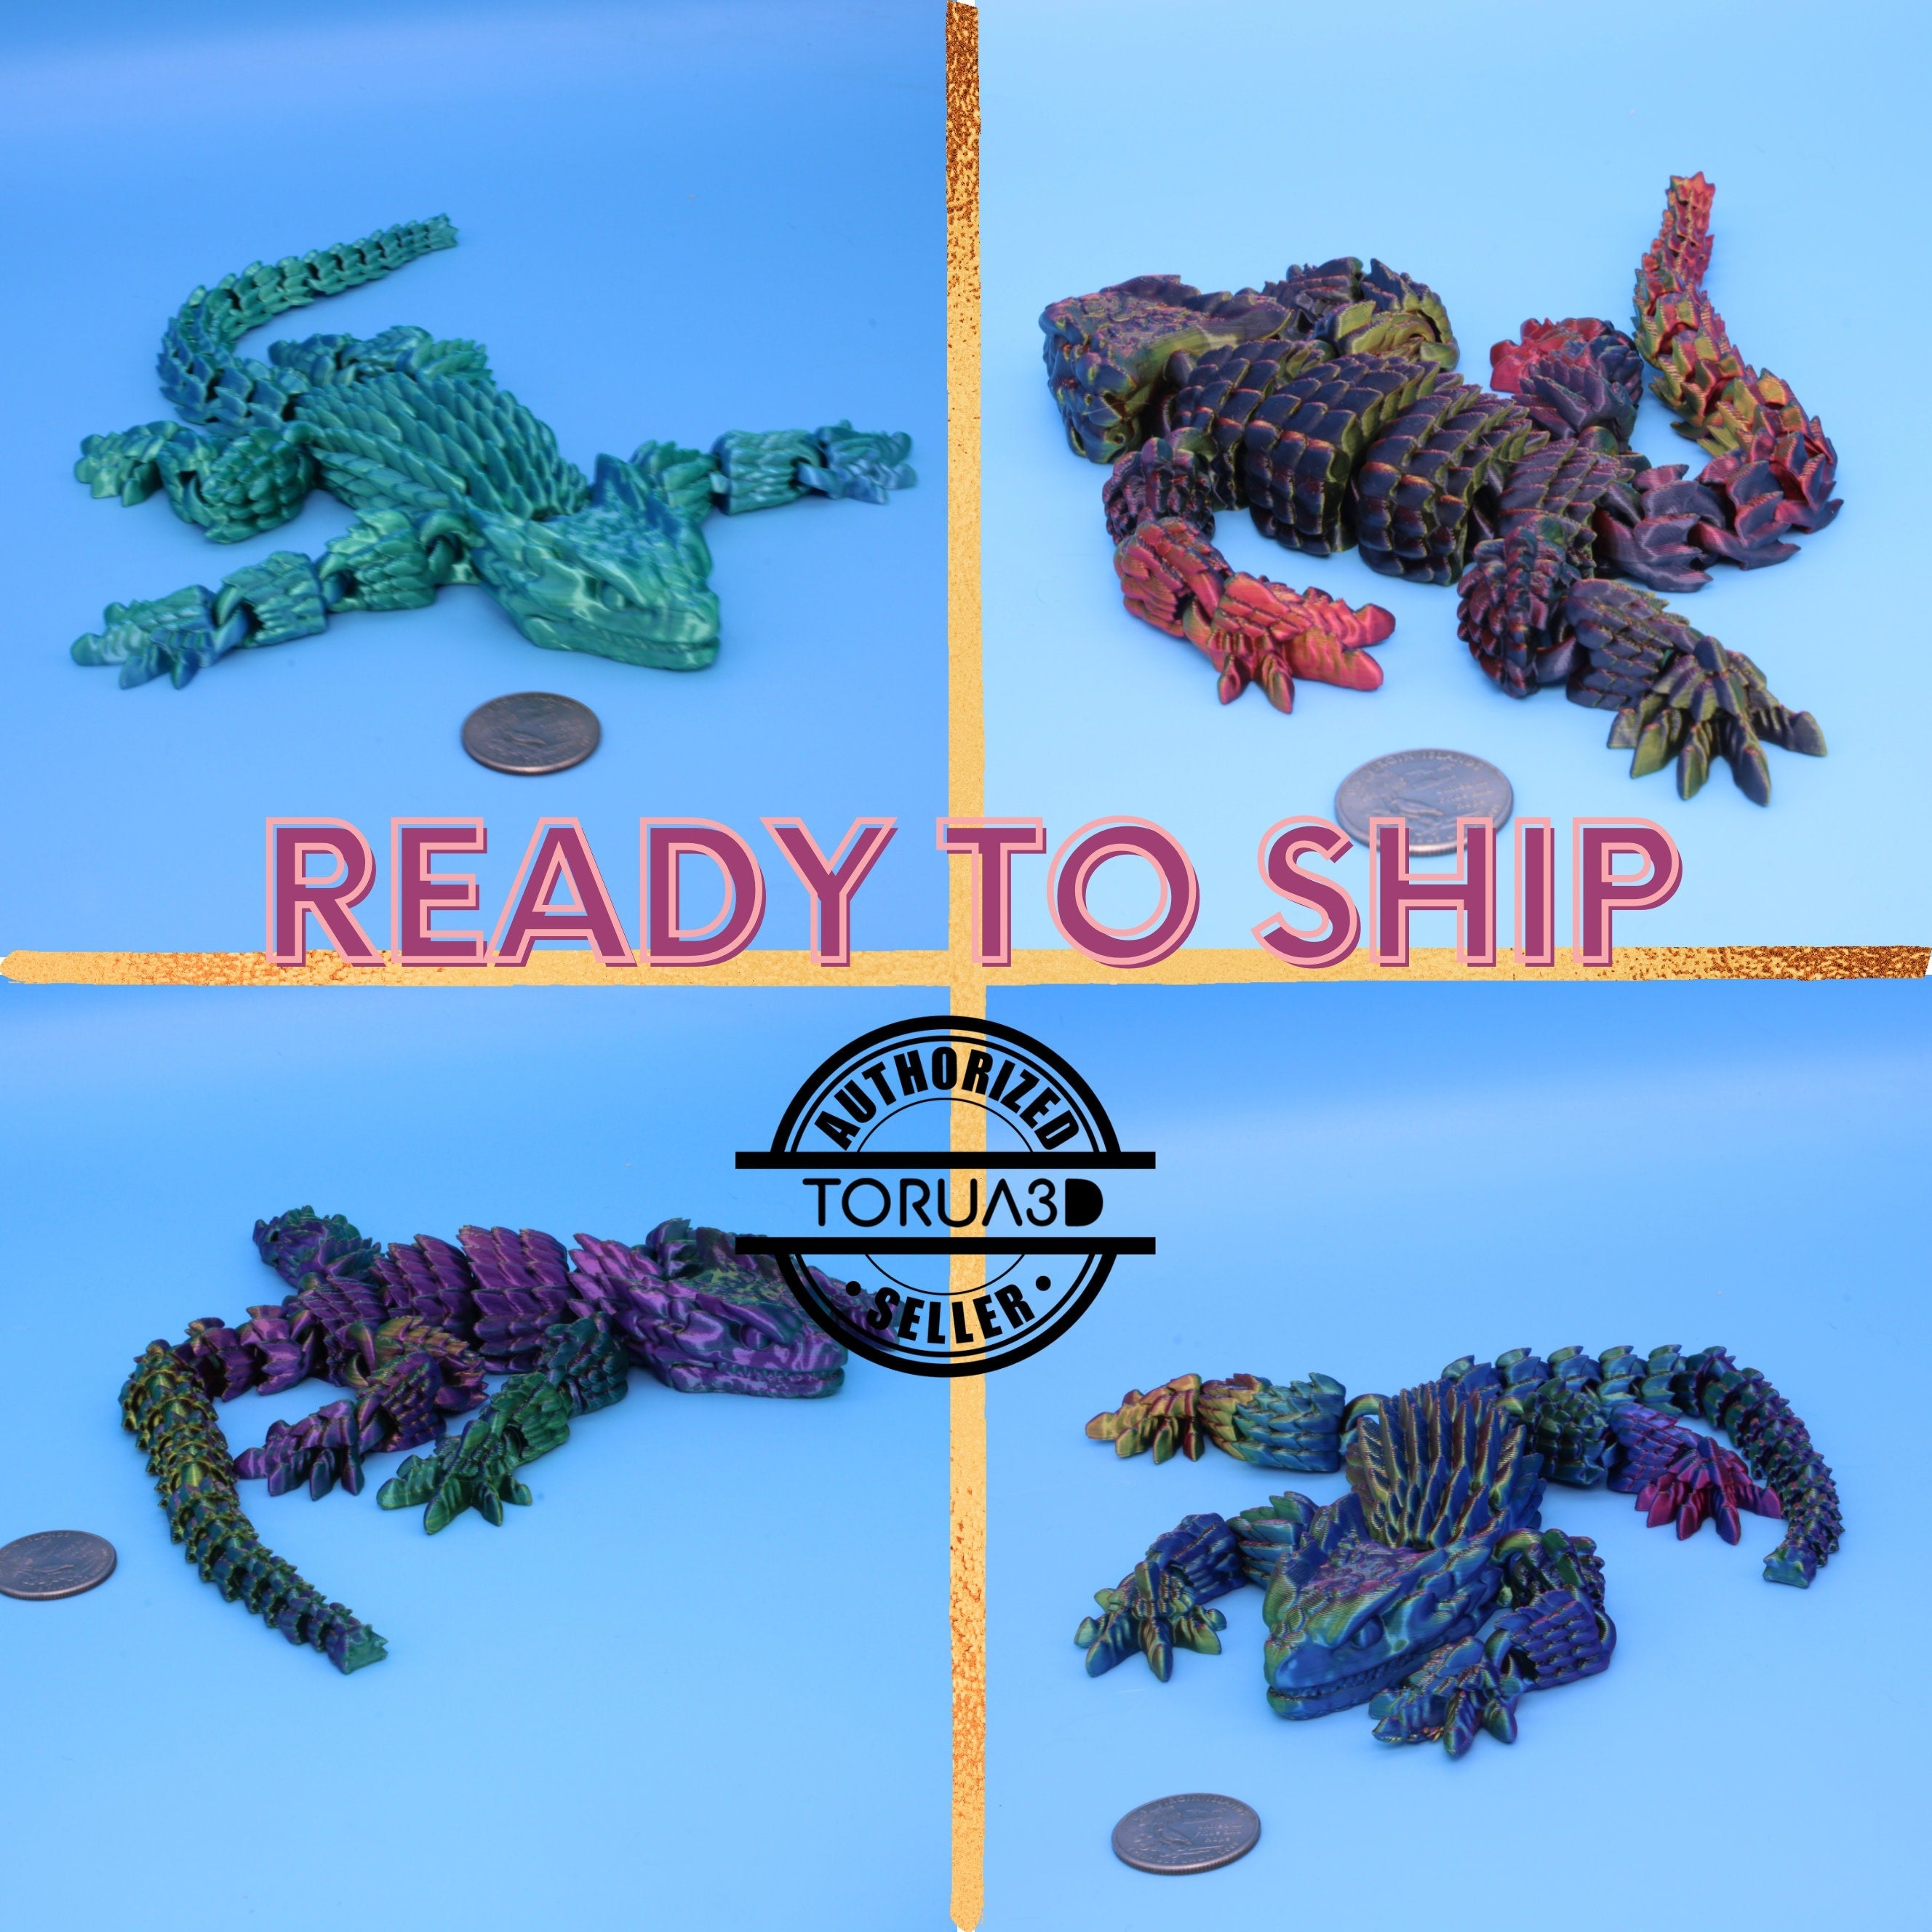 Lizard Armadillo - 3D Printed